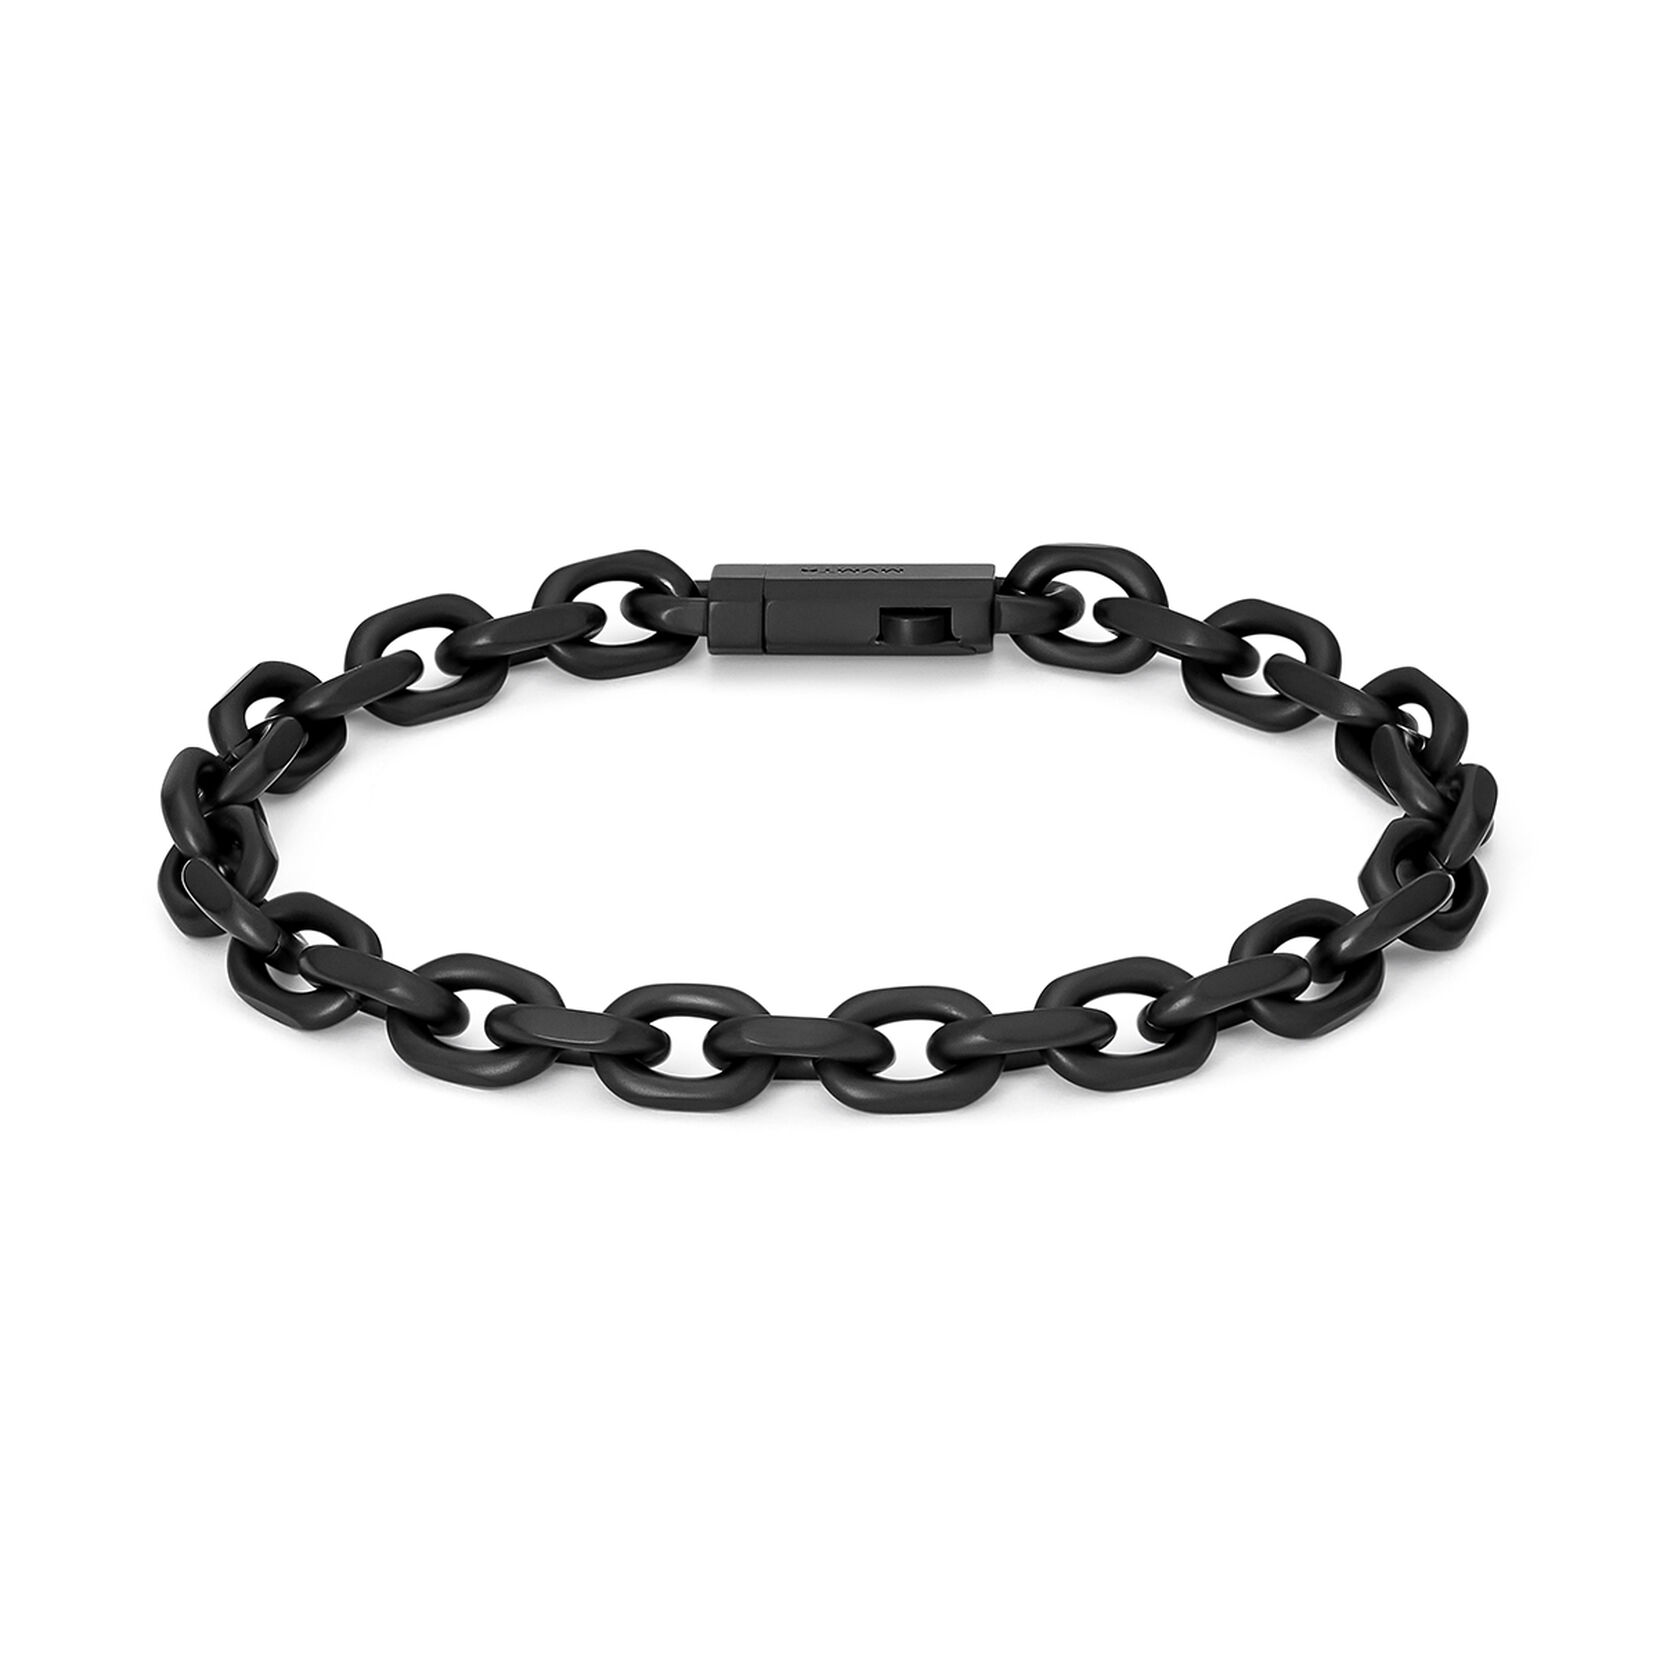 Men's Stainless Steel Bracelet with Black Onyx, 8.5